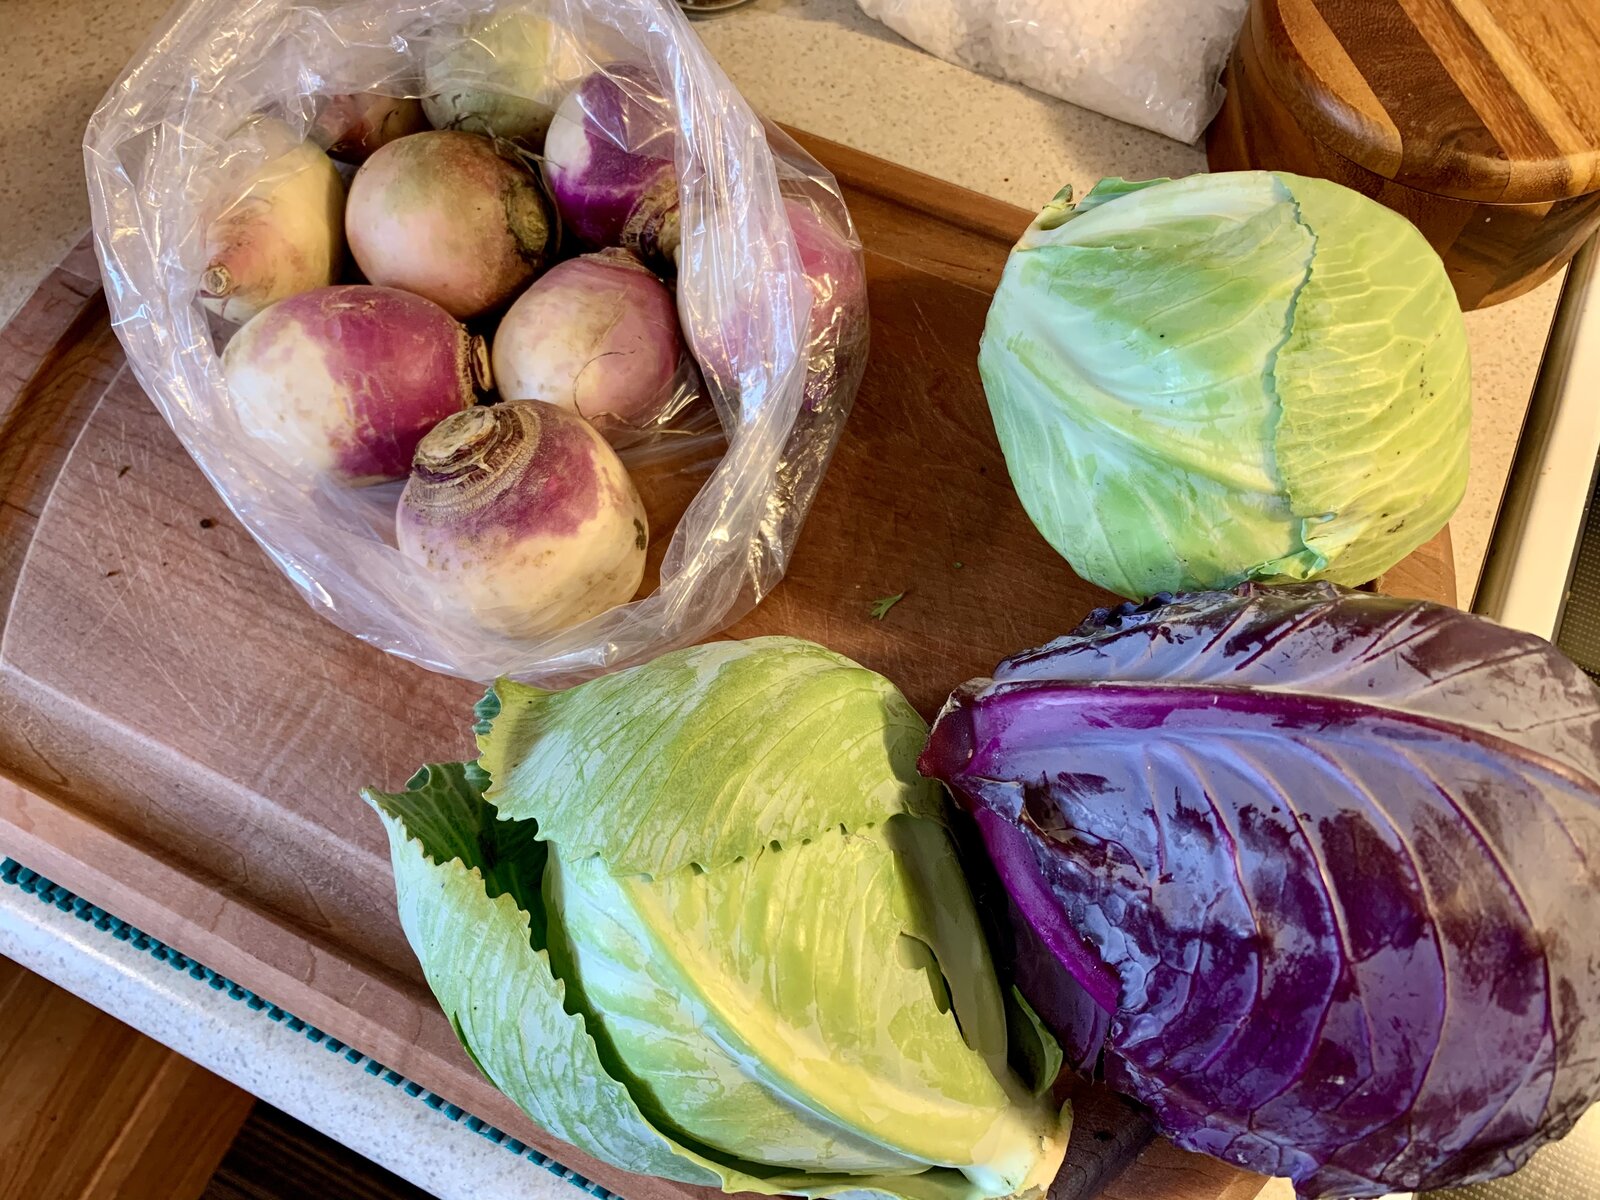 Turnips, Watermelon Radishes, & Cabbages